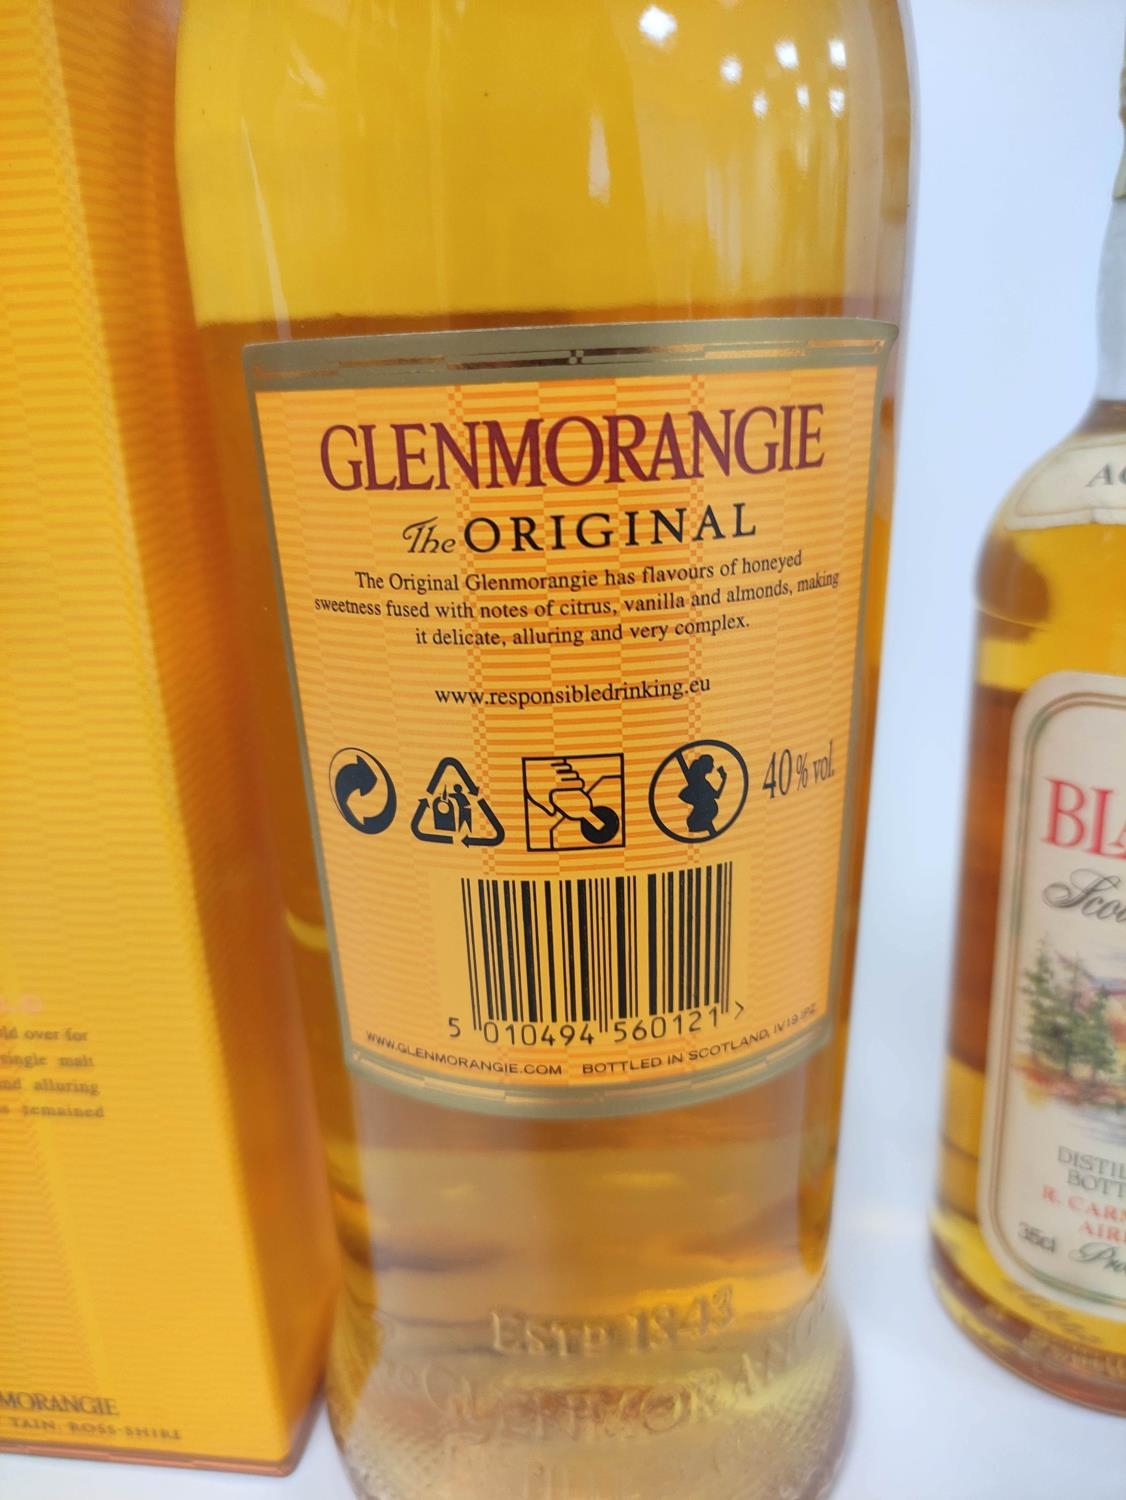 Glenmorangie, the original Highland single malt 10 years old Scotch whisky, 1 Litre, 40% vol, boxed, - Image 4 of 7